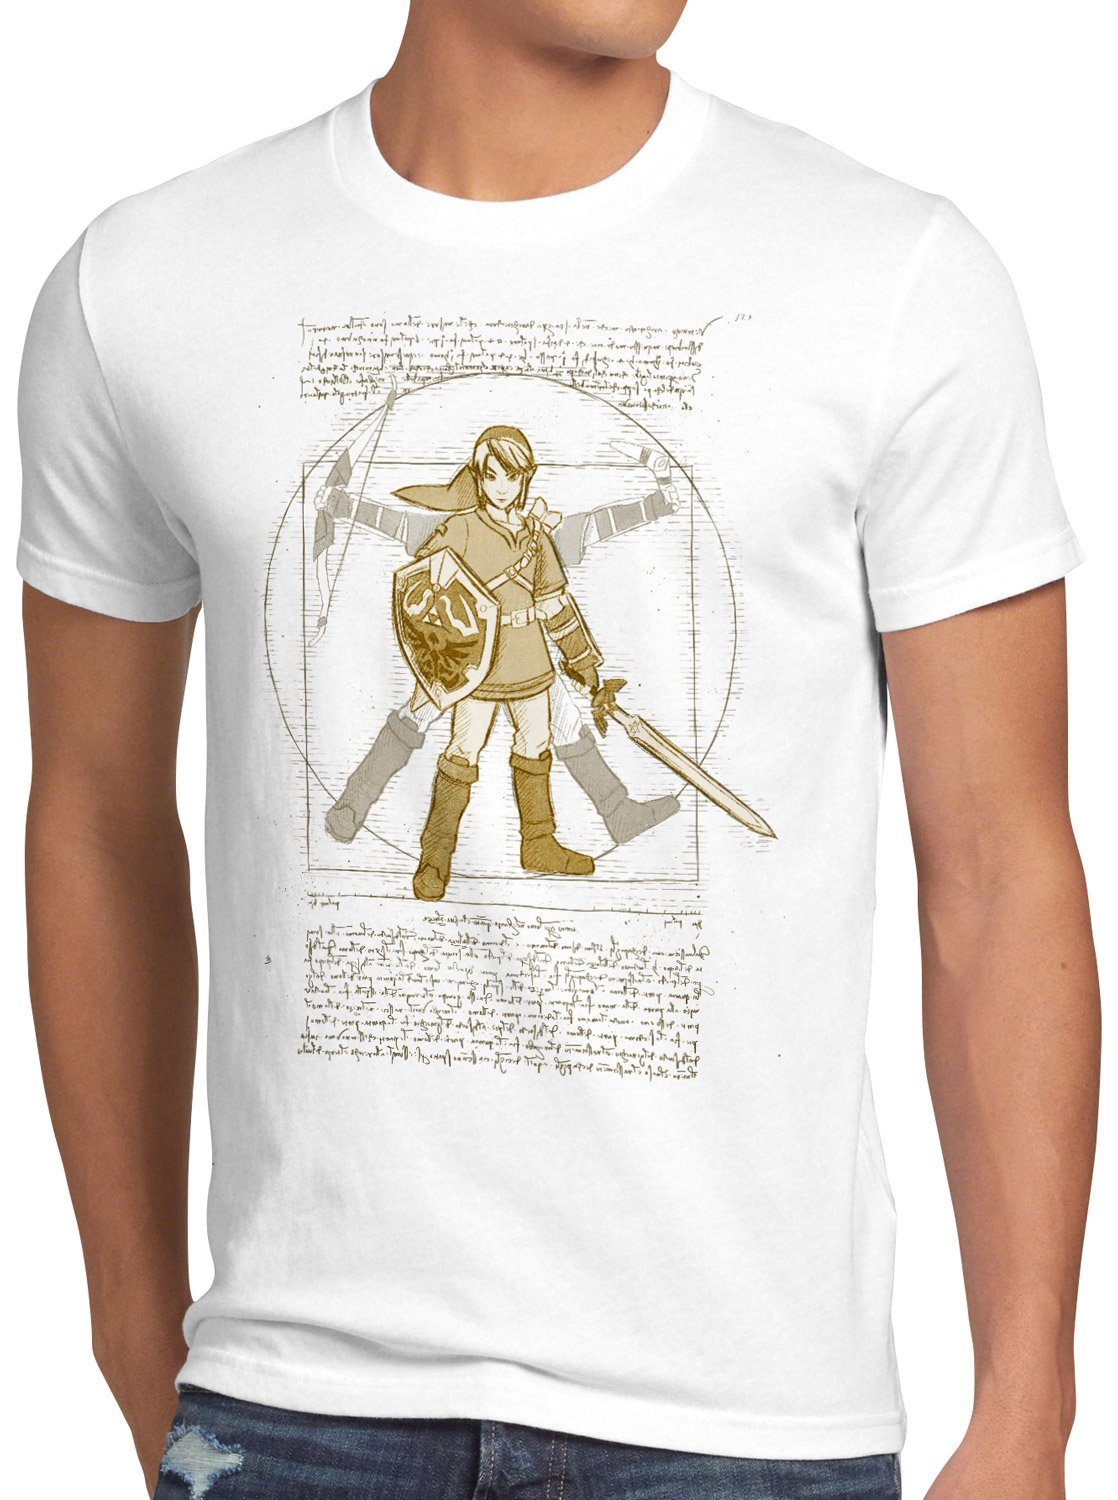 style3 Print-Shirt Herren snes weiß Vitruvianischer ocarina zelda T-Shirt legend nes Link